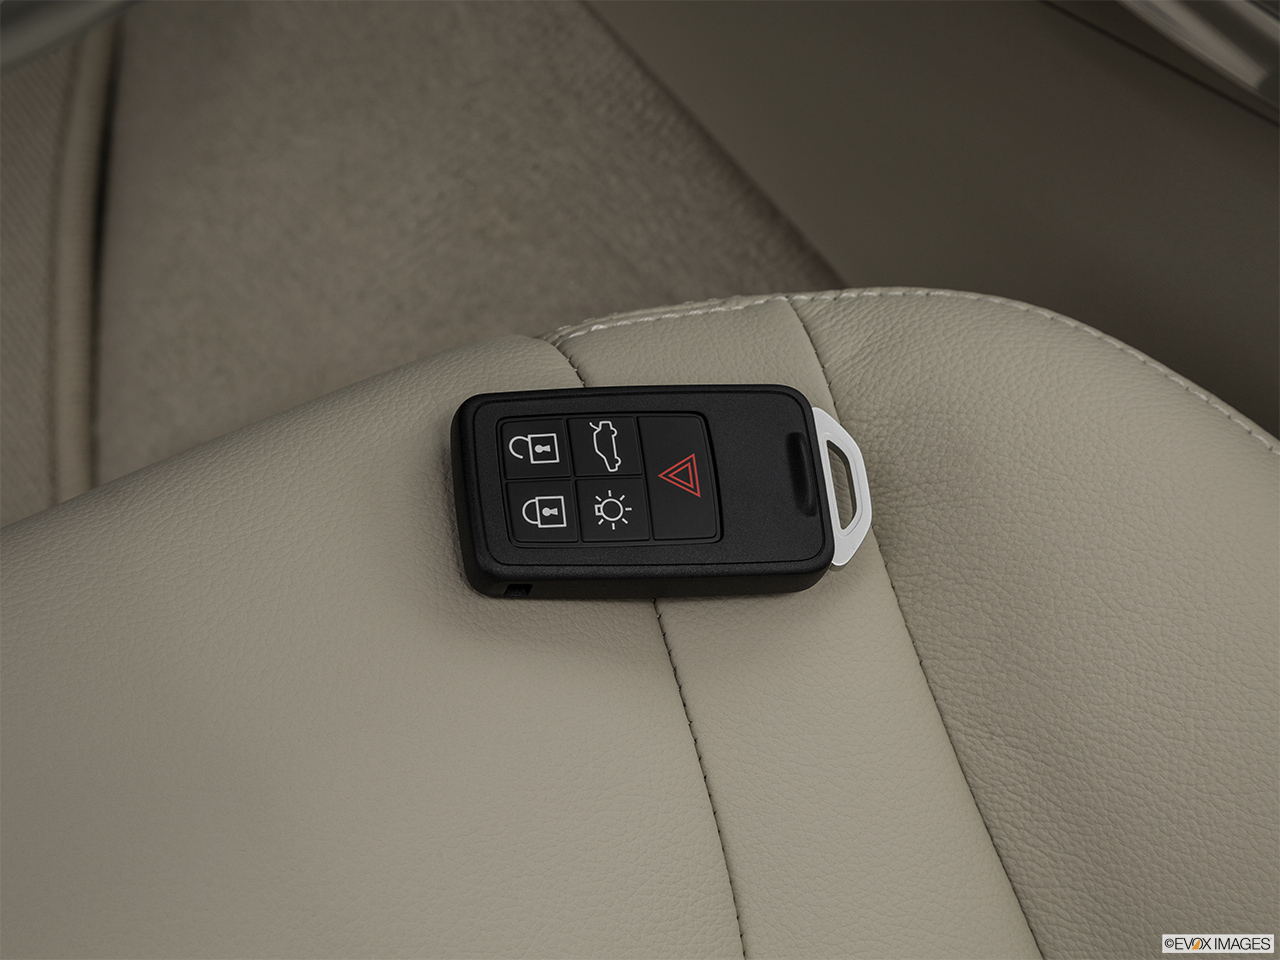 2016 Volvo S60 T5 Drive-E FWD Premier Key fob on driver's seat. 